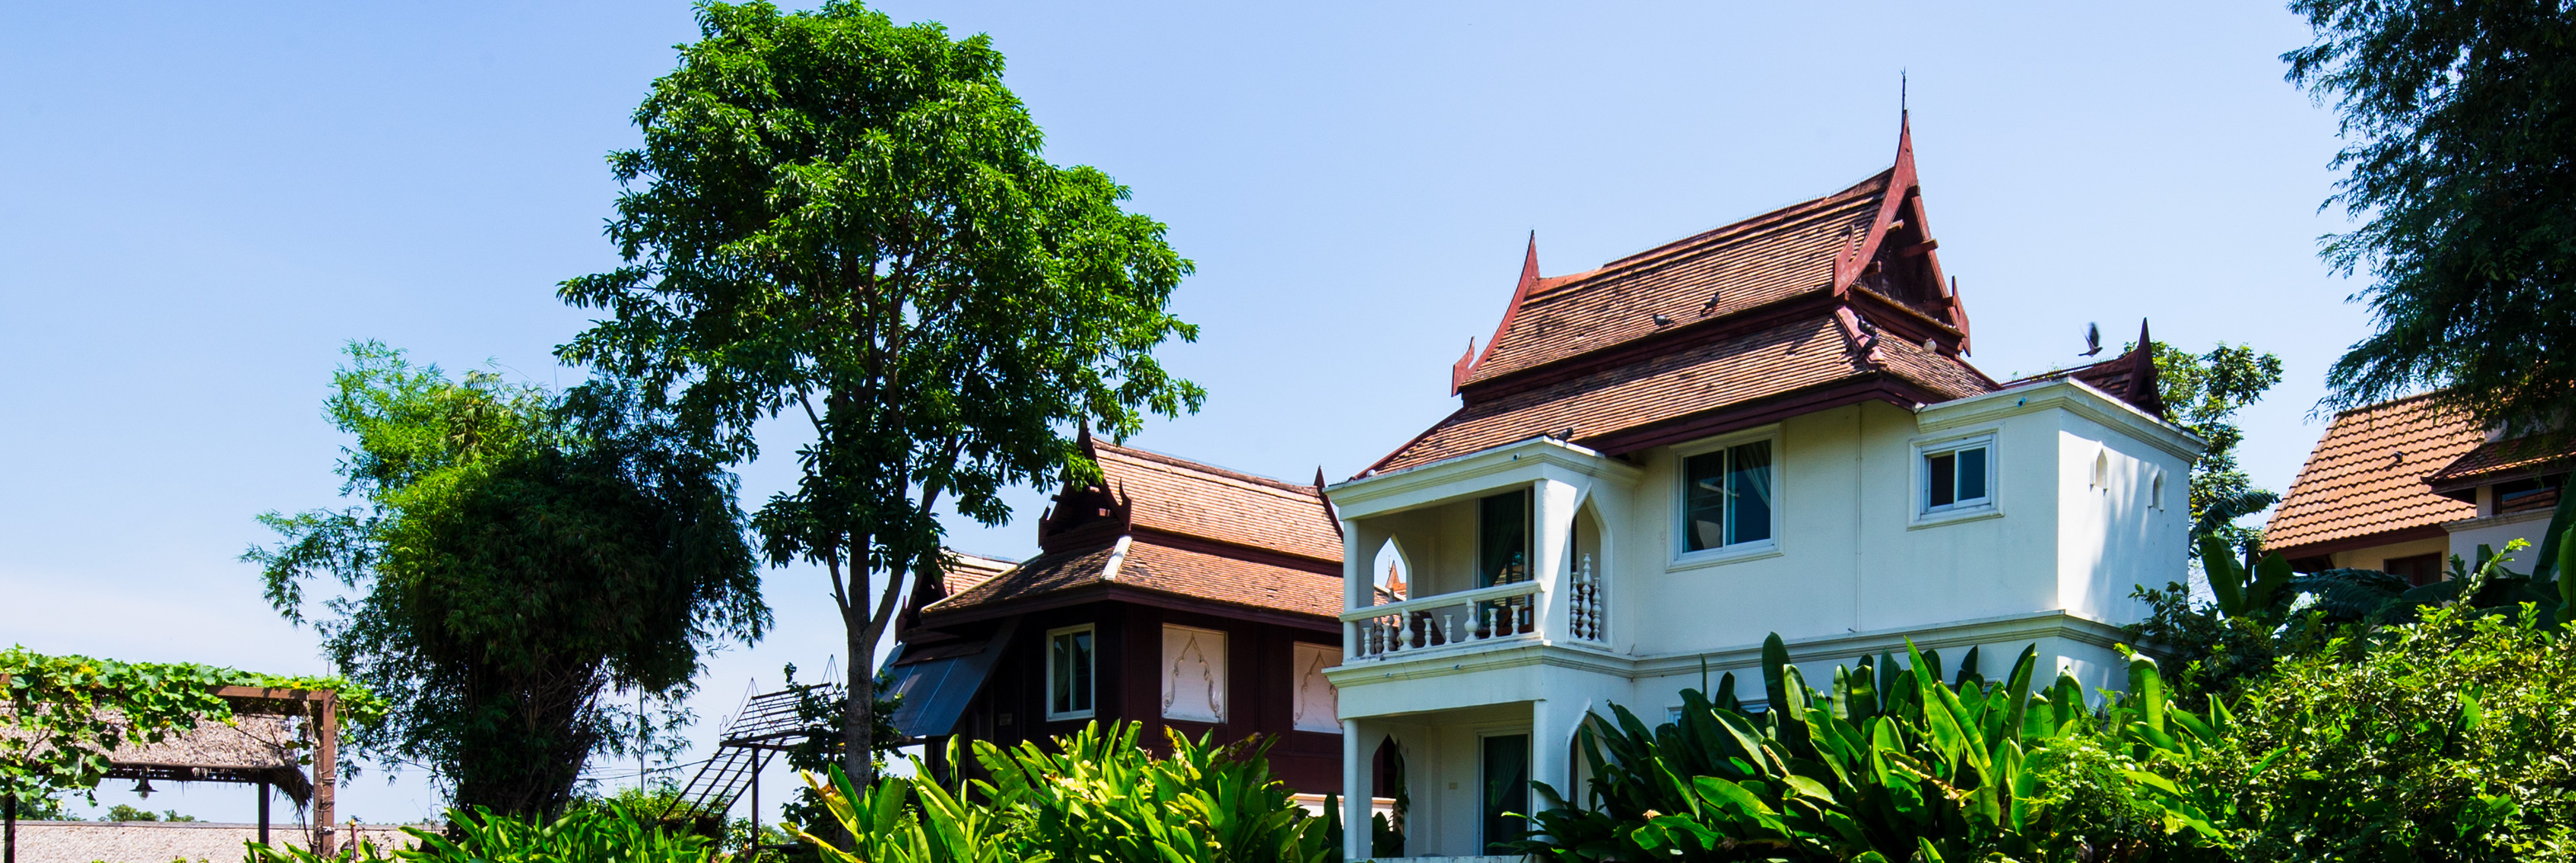 Room for booking, Ayutthaya Garden River Home River Resort Thailand